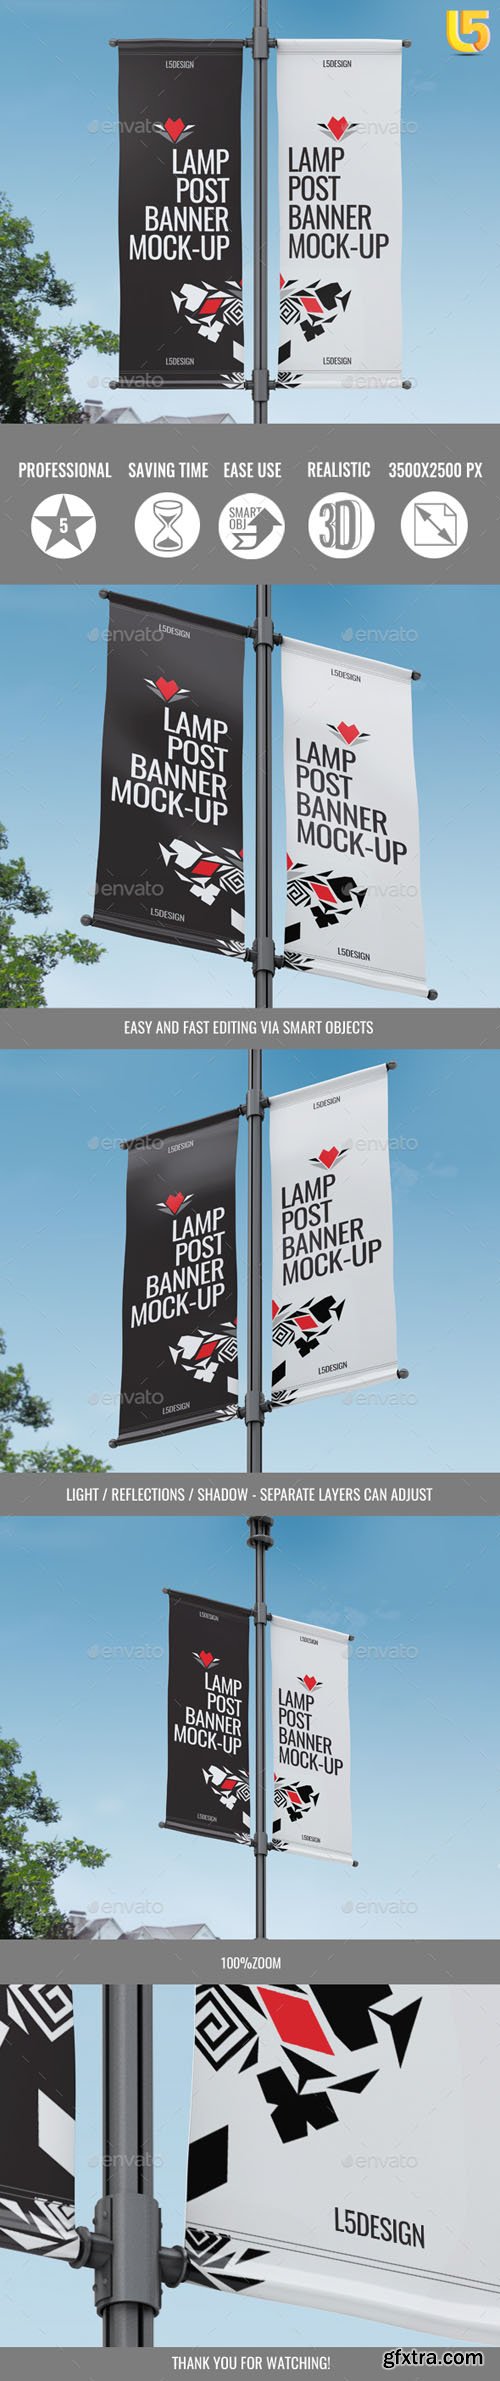 GR - Lamp Post Banner Mock-Up 21074462